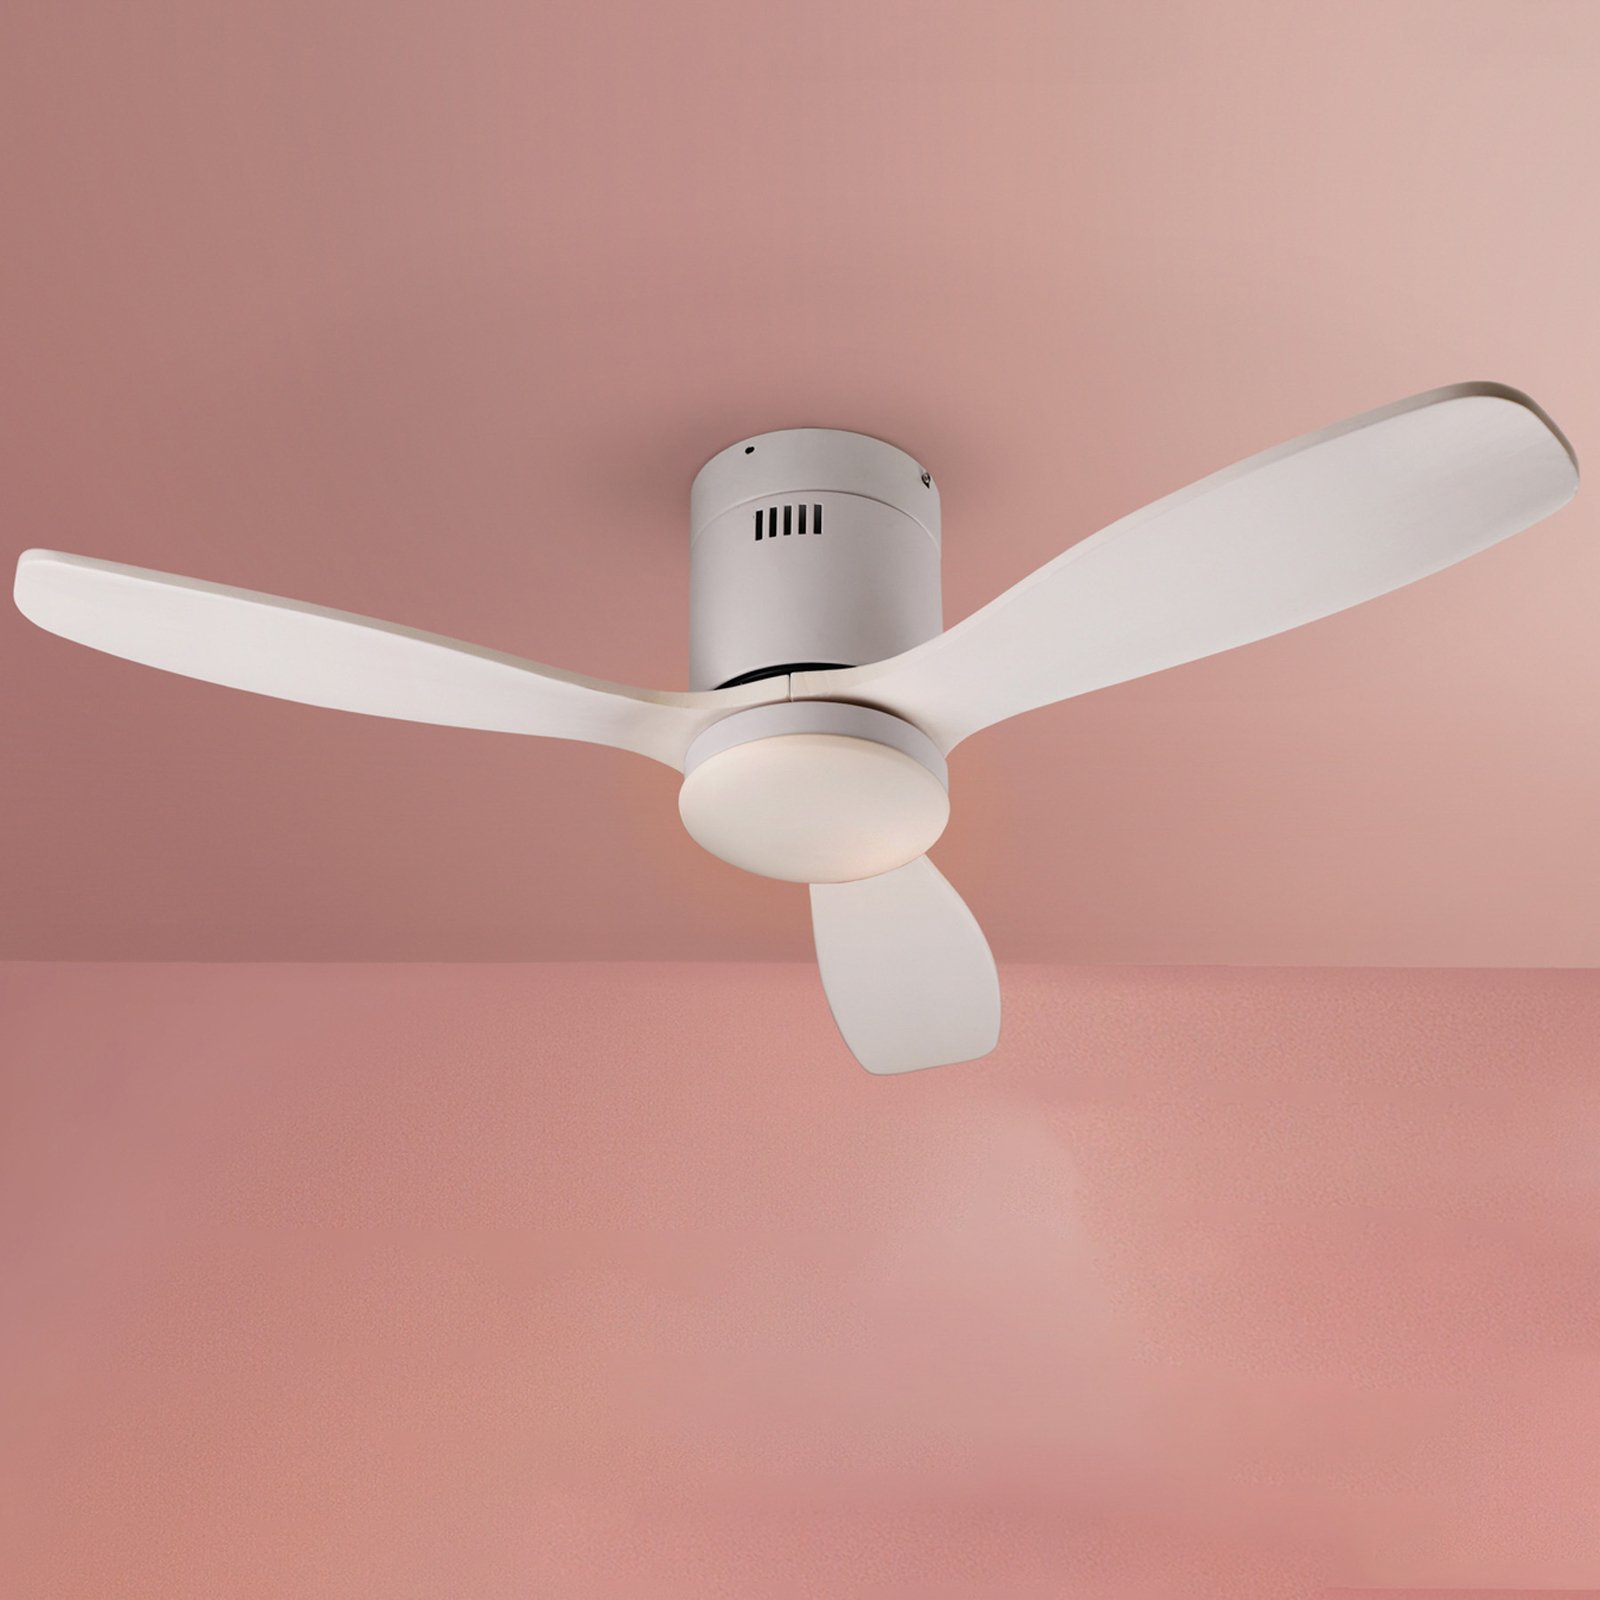 LED ceiling fan Siroco Mini, DC, quiet, white, CCT